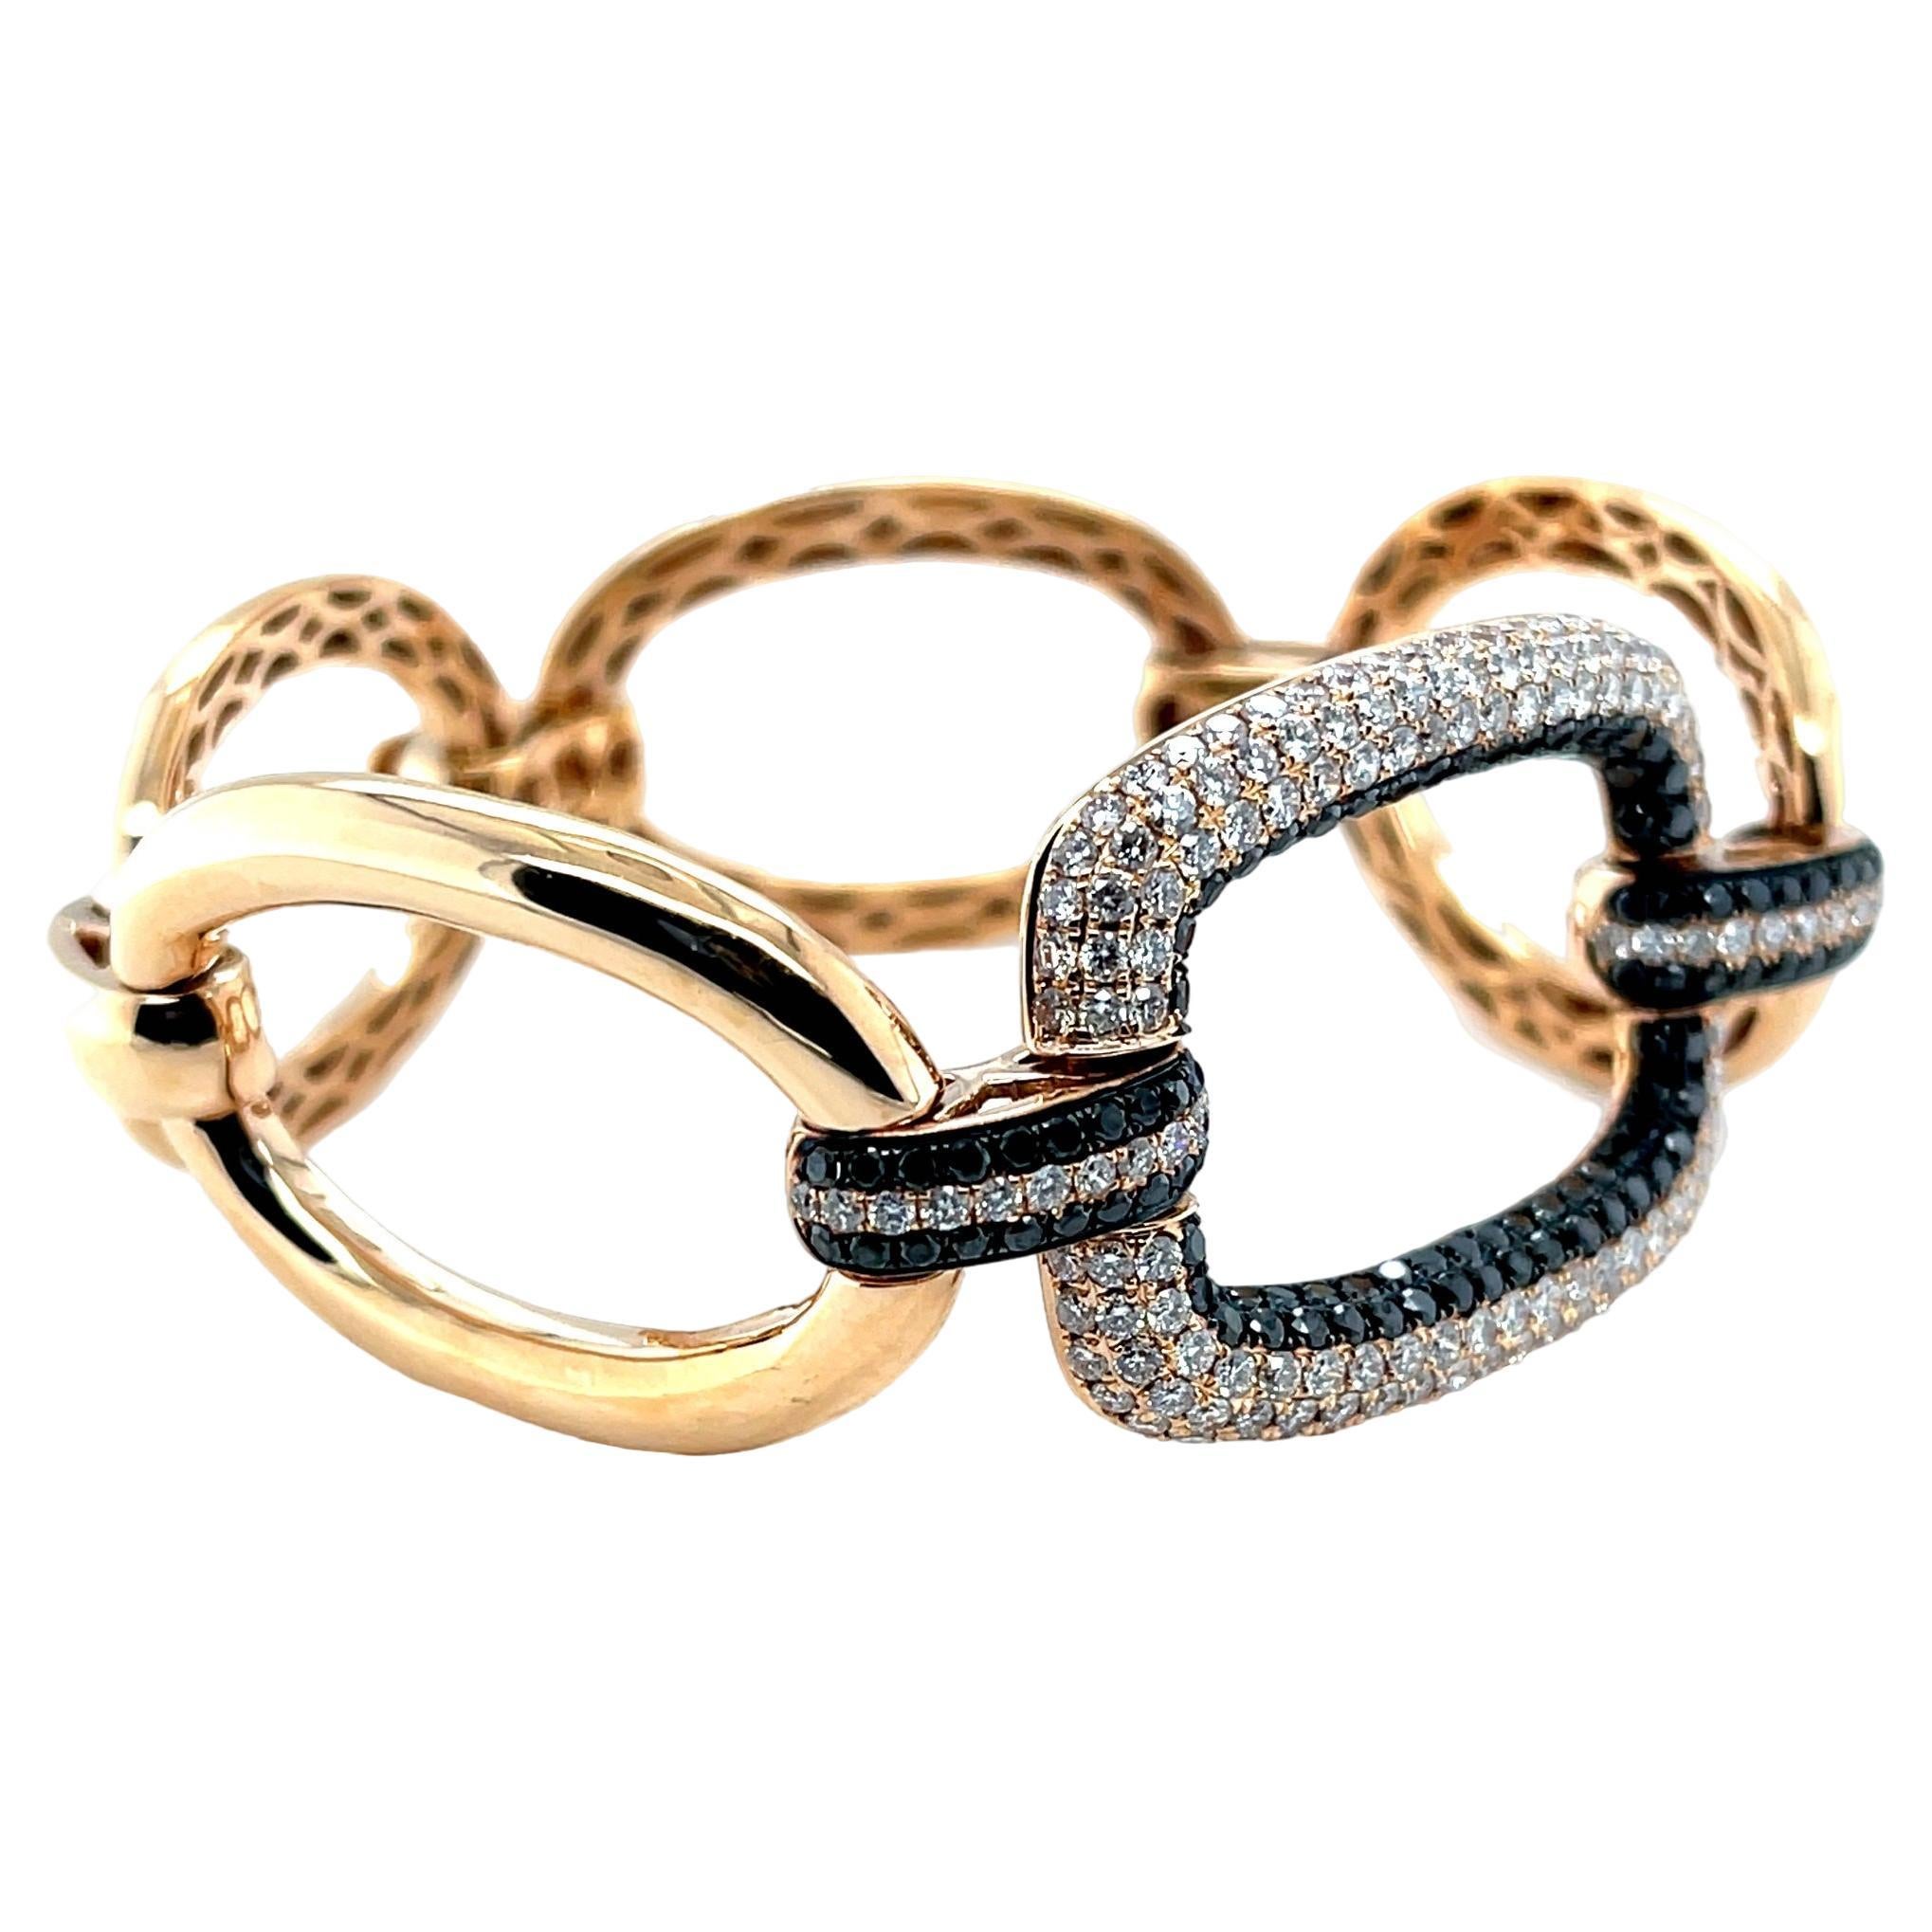 Black and White Diamond Link Bracelet in Rose Gold, 3.52 Carat Total For Sale